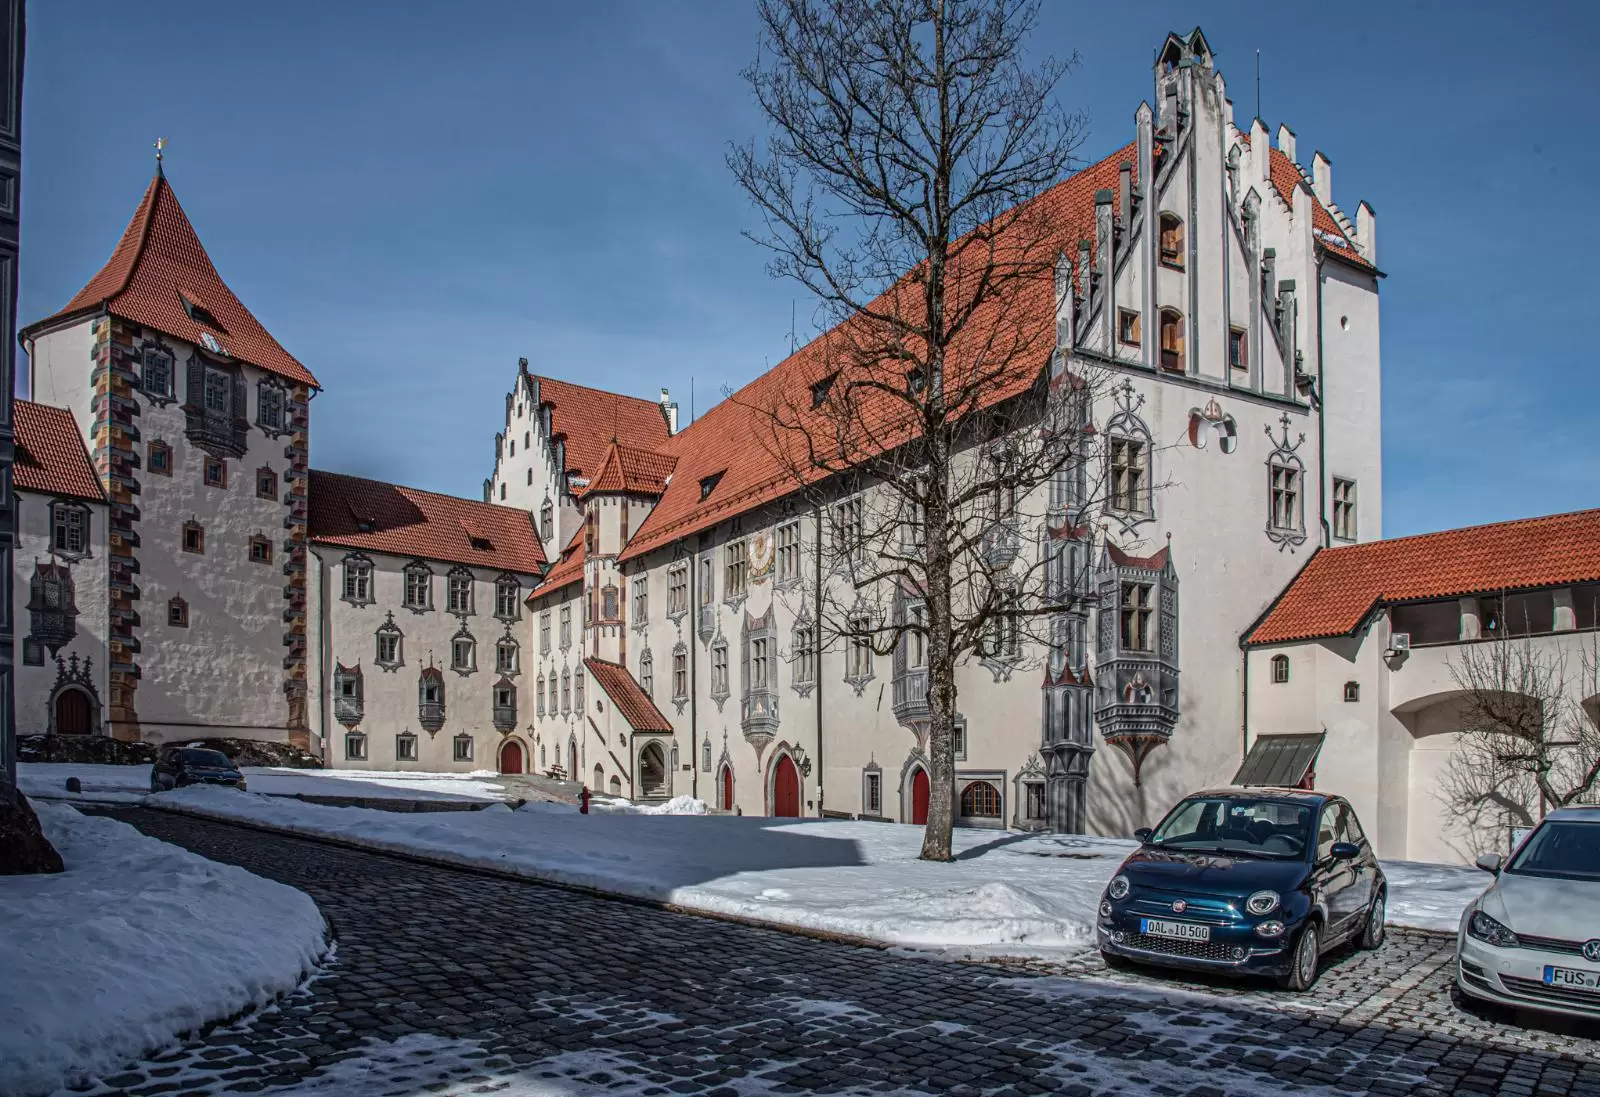 Füssen High Castle